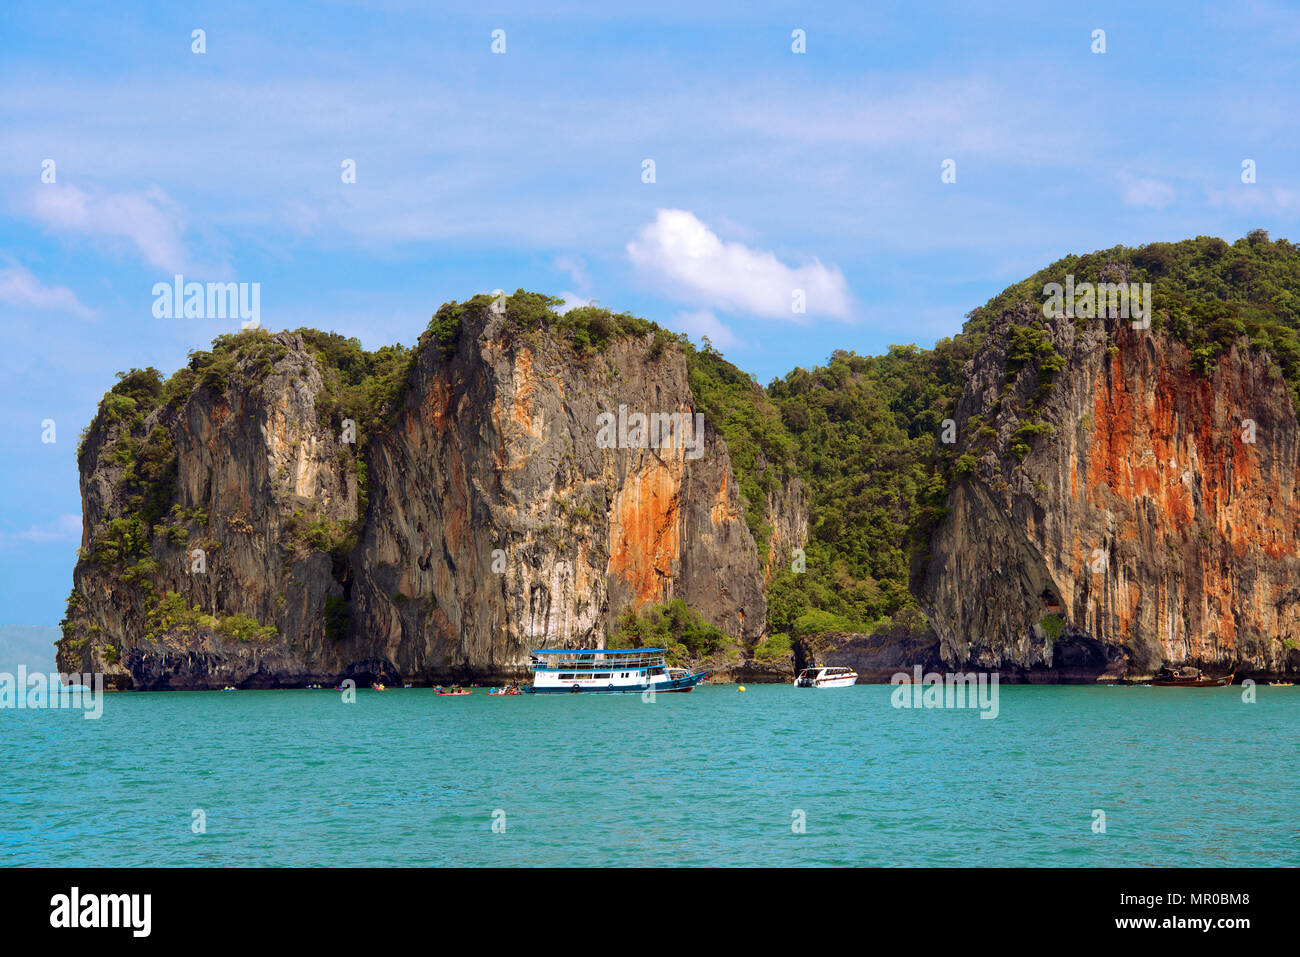 Massive limestone cliff face Phang Nga Bay National Park Thailand Stock Photo